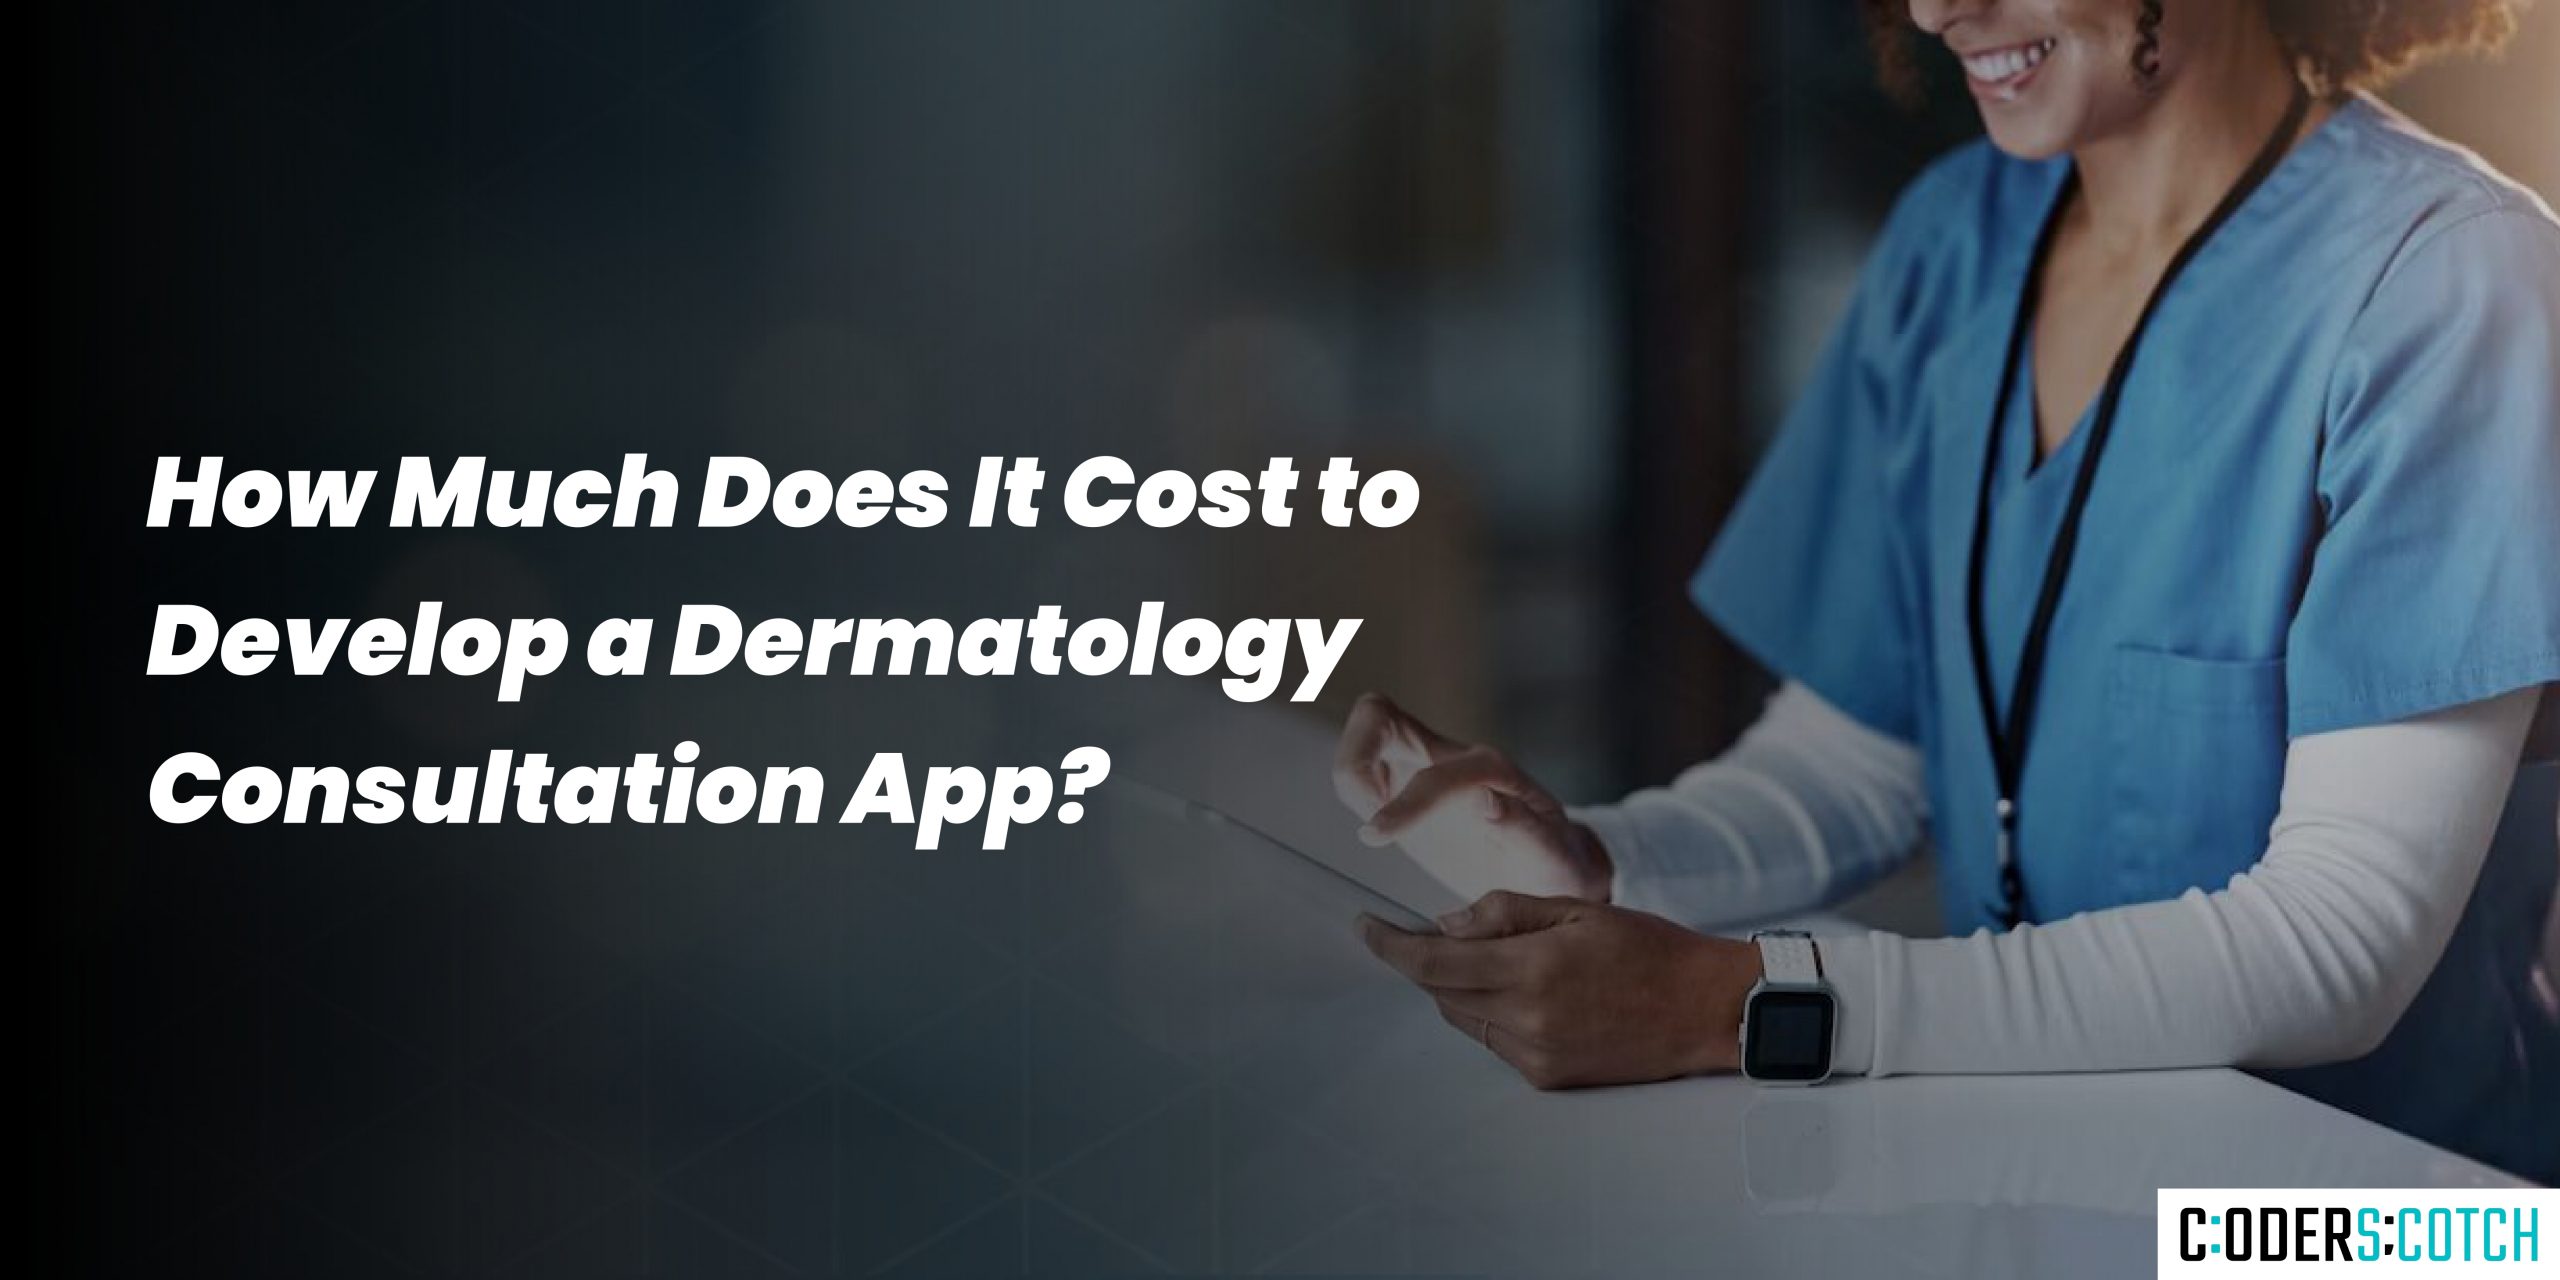 Dermatology Consultation App